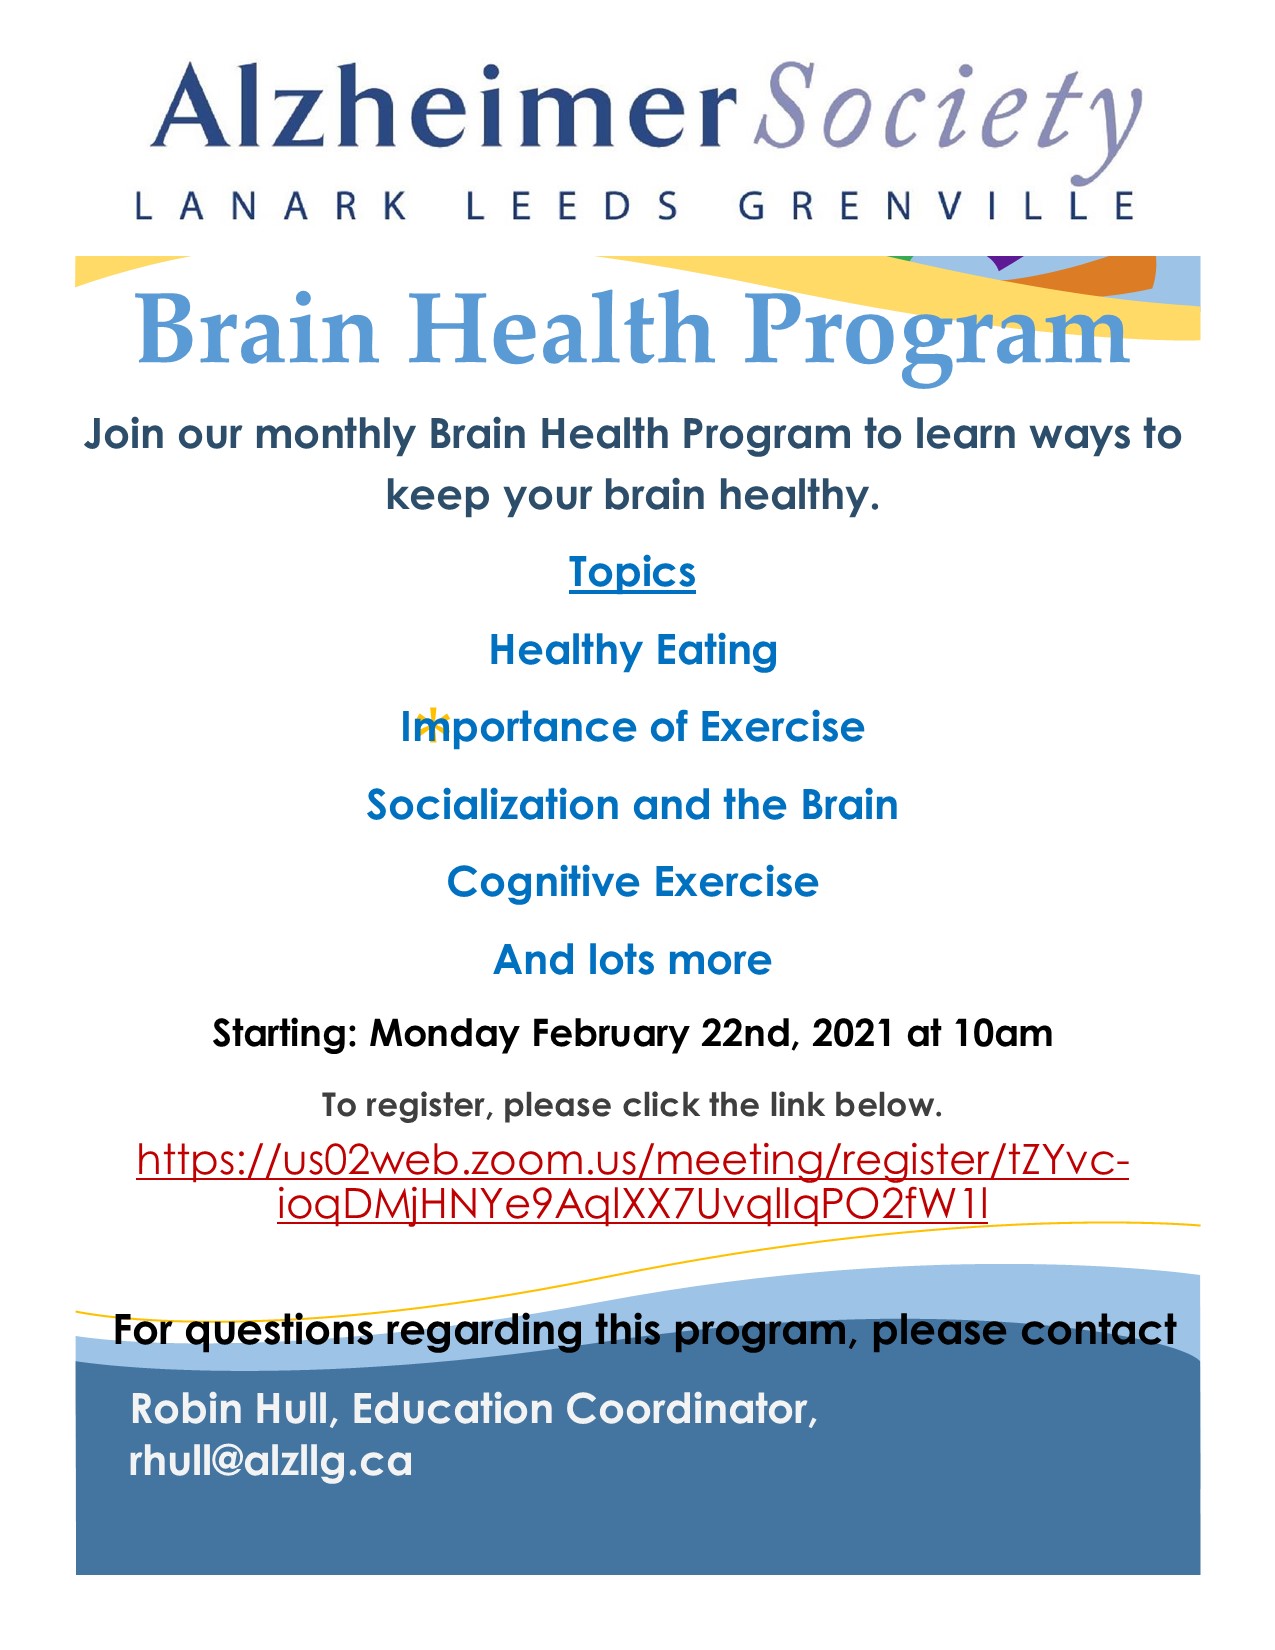 Brain Health Program 2021image